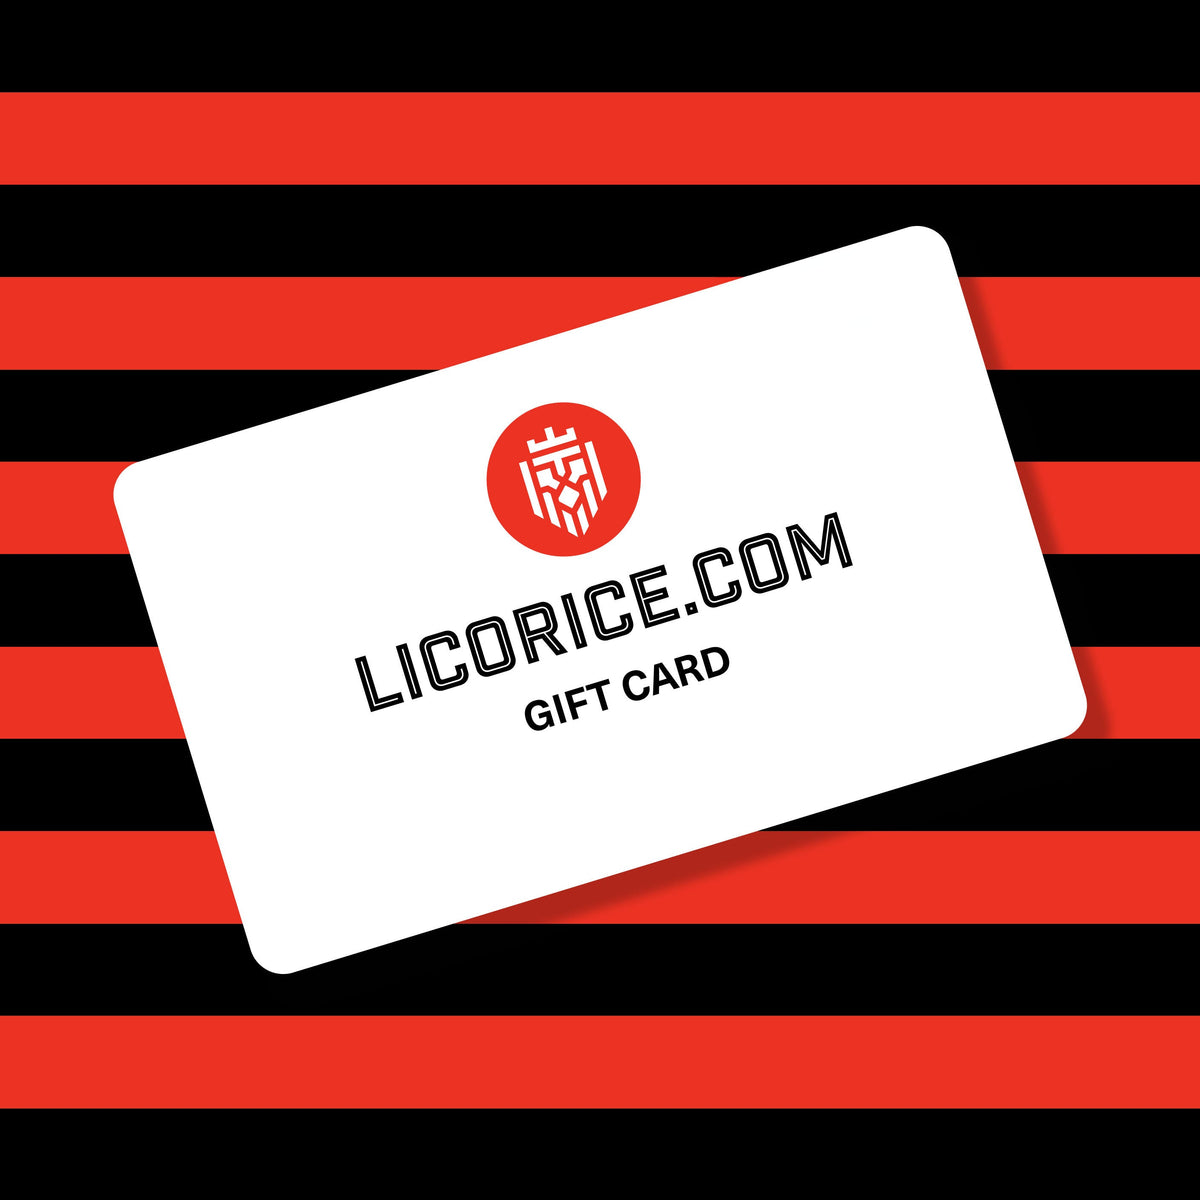 Licorice.com E-Gift Card